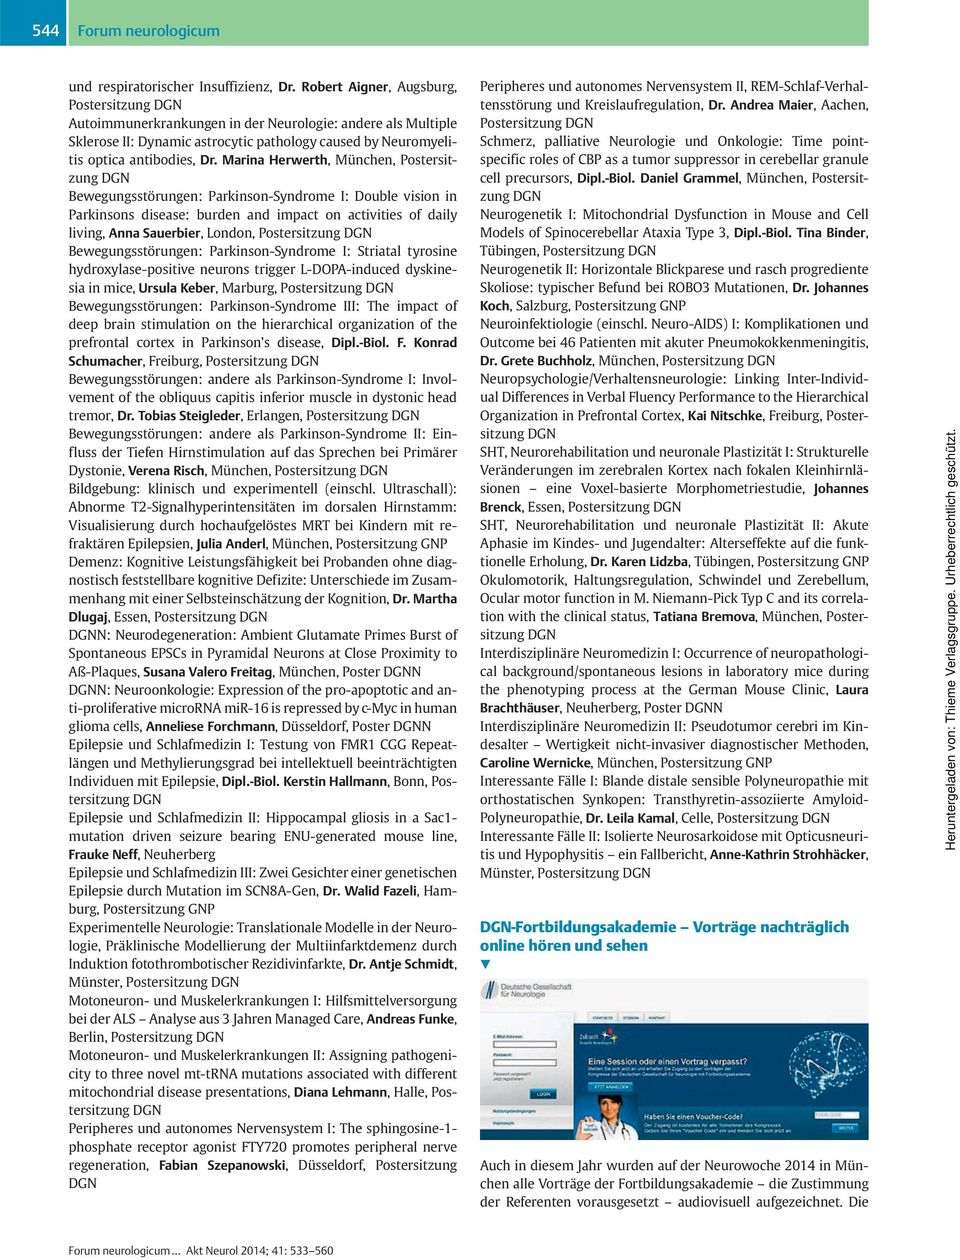 Marina Herwerth, München, Postersitzung DGN Bewegungsstörungen: Parkinson-Syndrome I: Double vision in Parkinsons disease: burden and impact on activities of daily living, Anna Sauerbier, London,